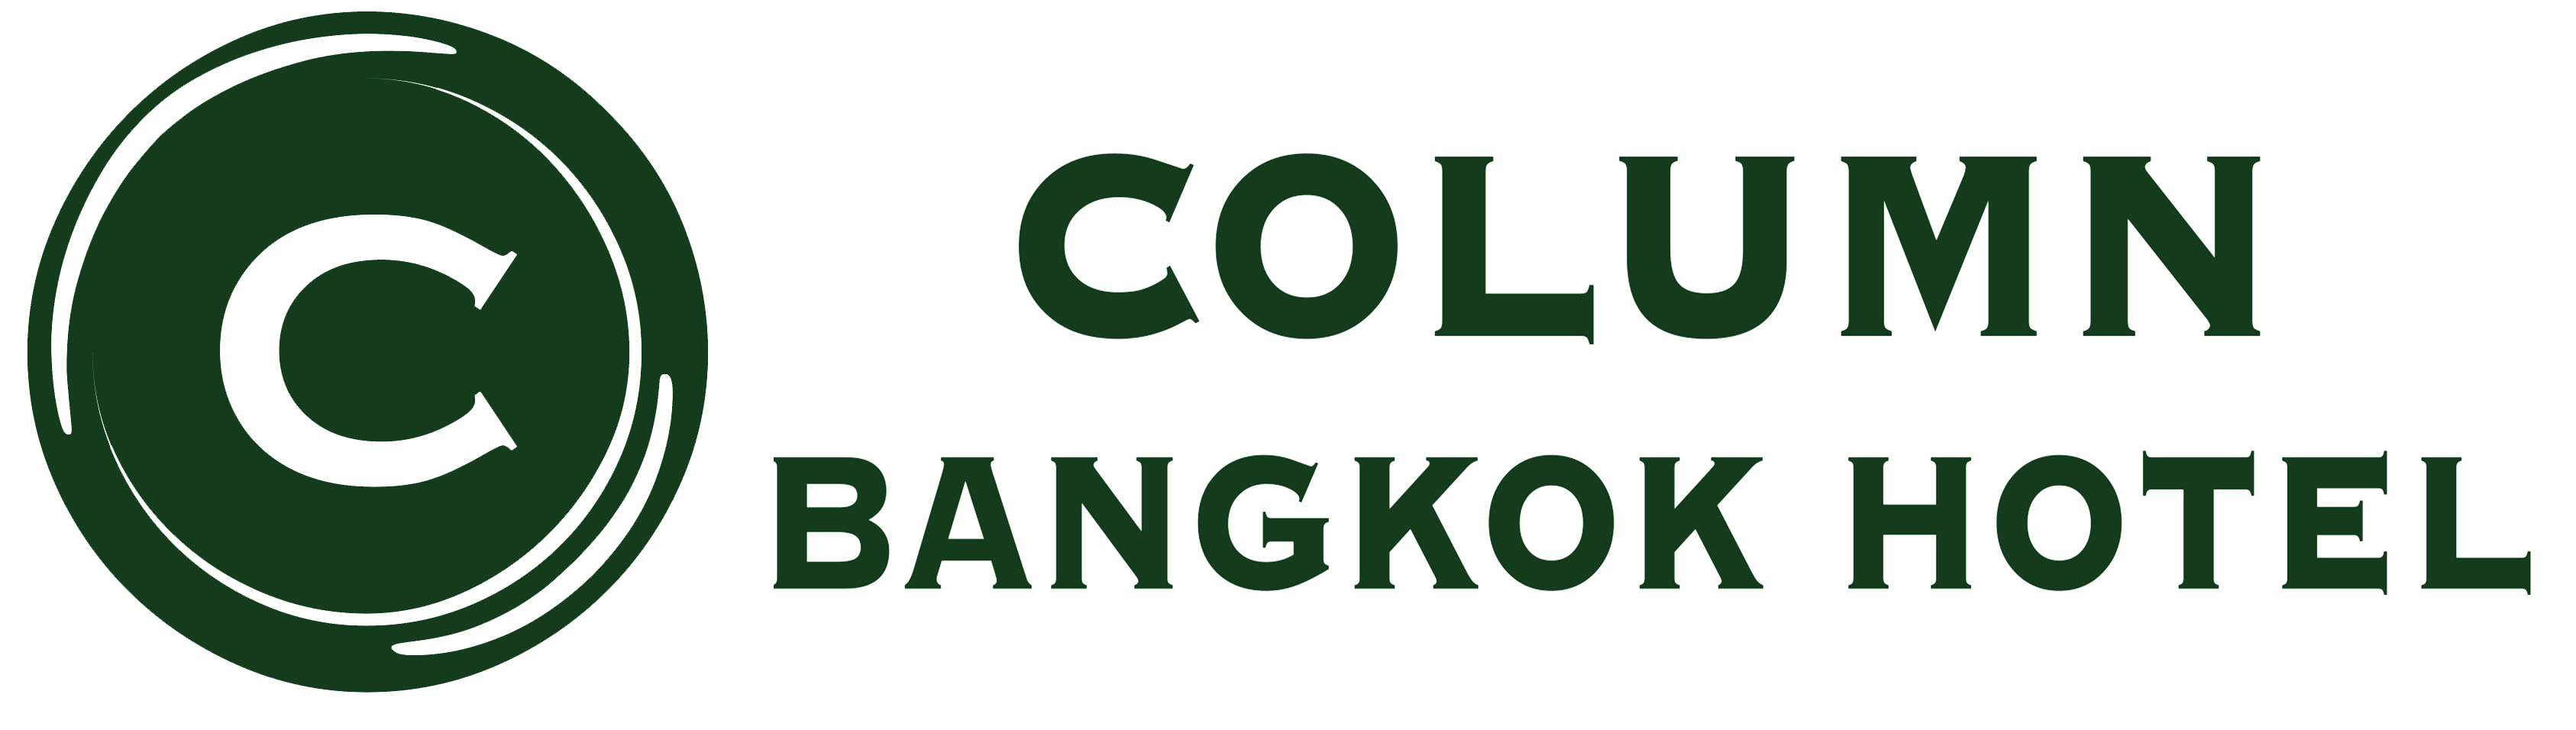 Column Bangkok